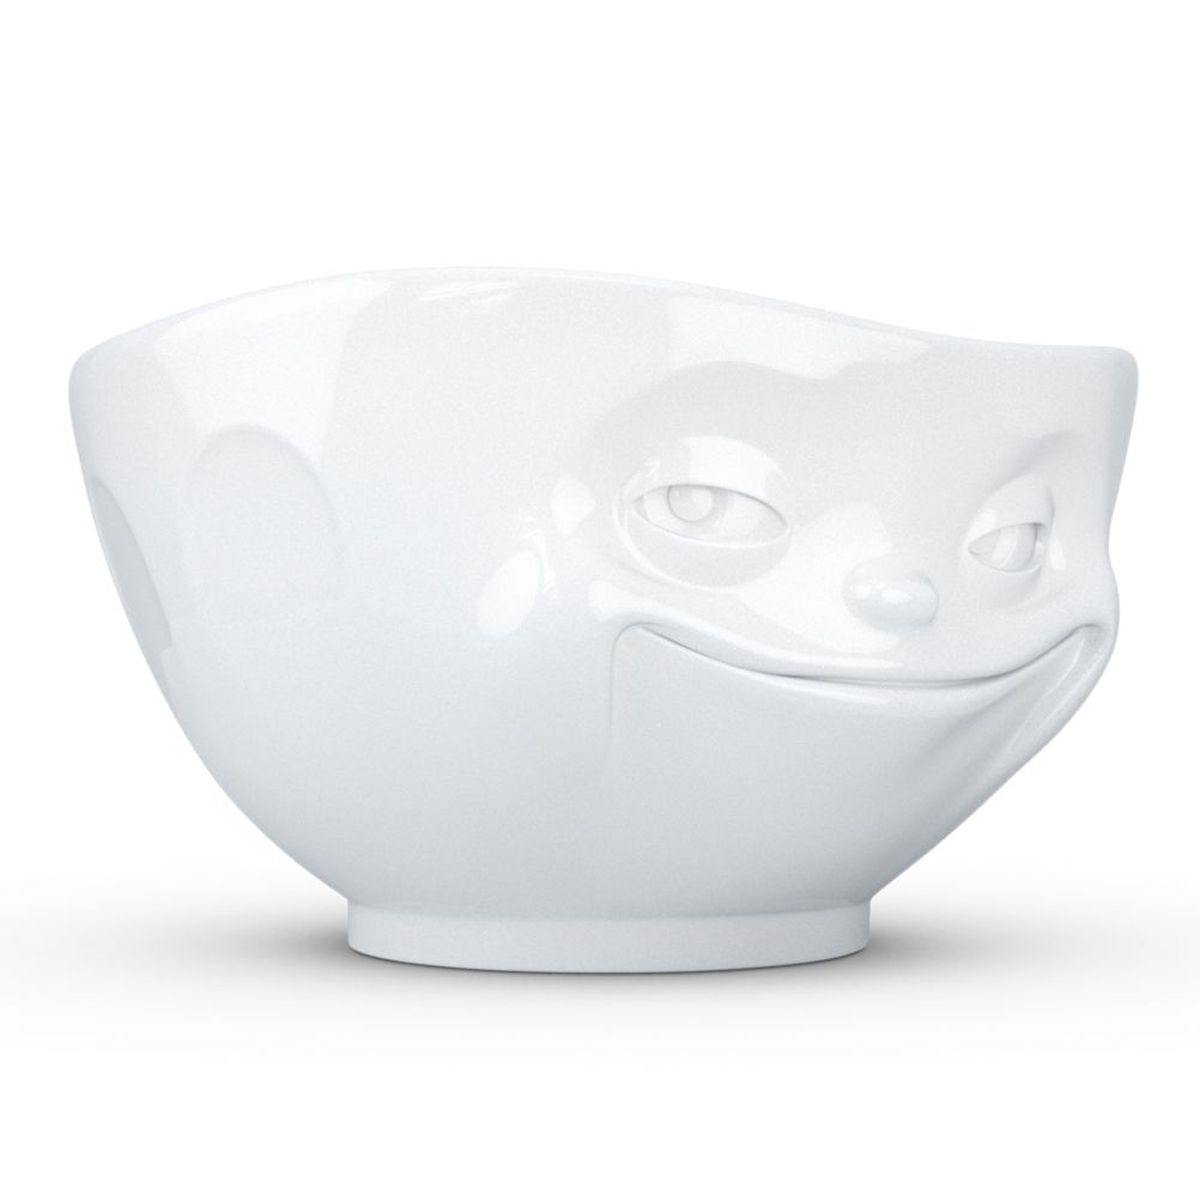 XL Mood Porcelain Bowl by Tassen 1000 ml - Smart